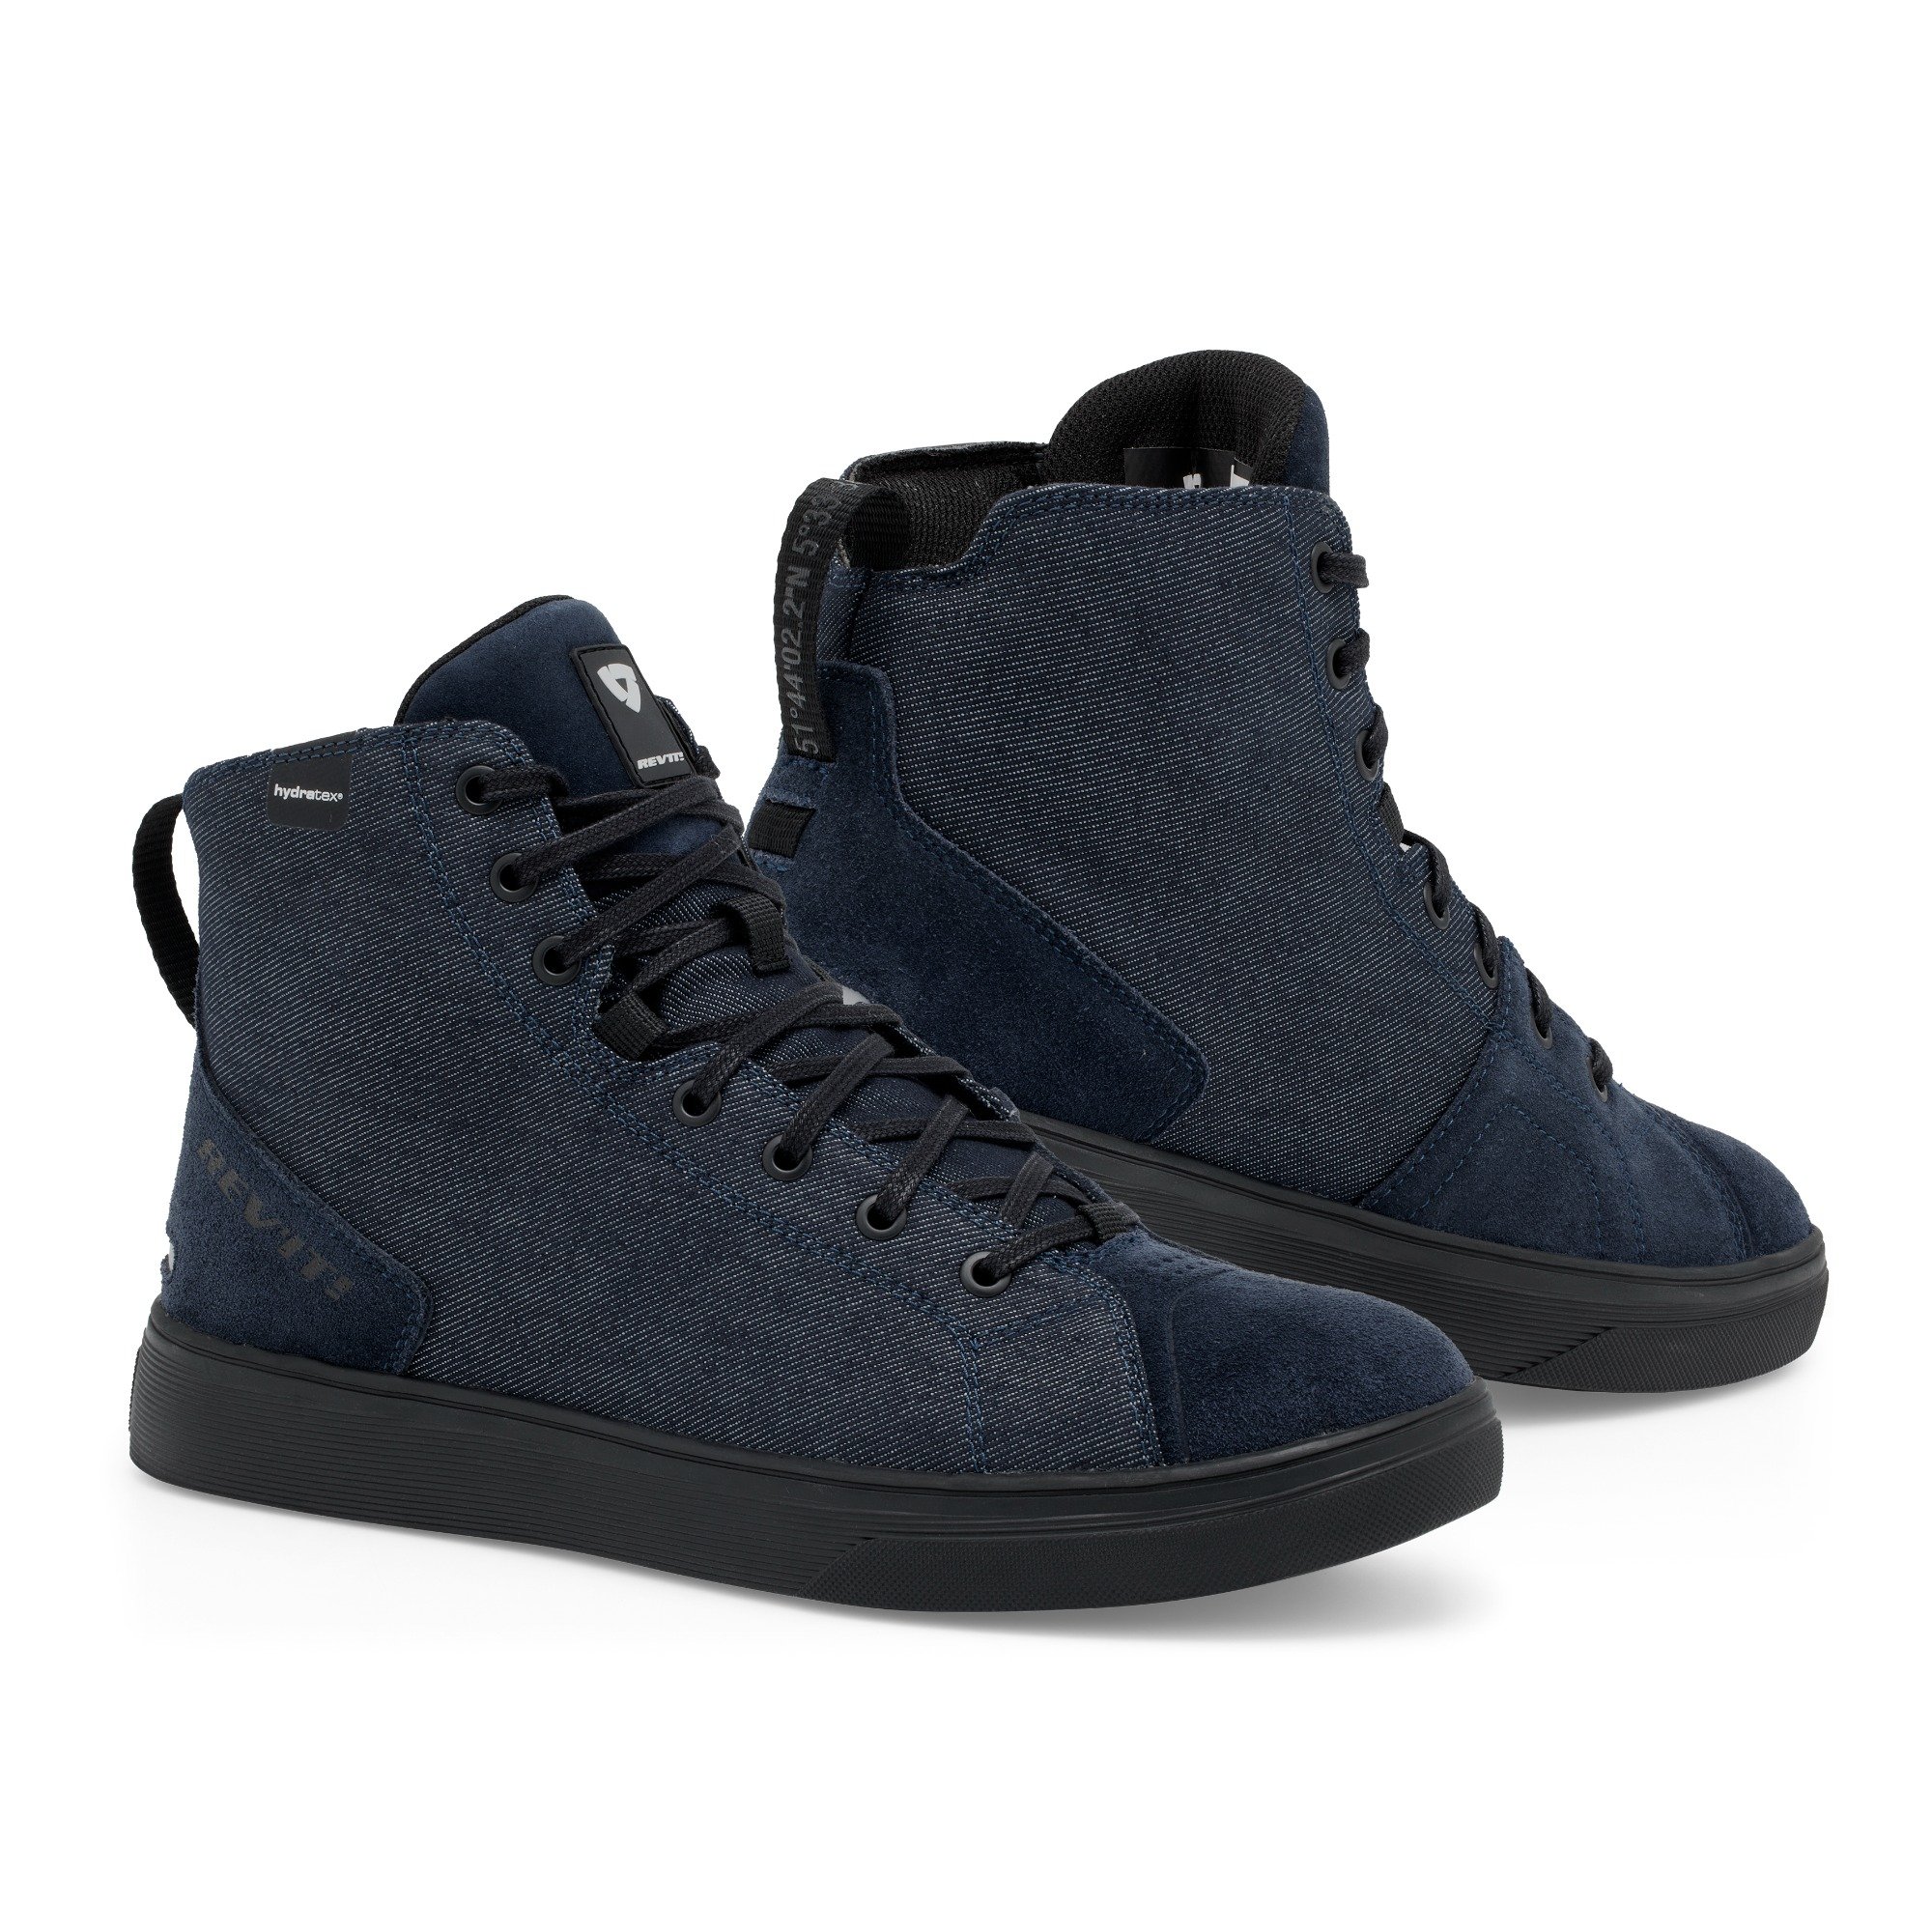 Image of REV'IT! Delta H2O Shoes Dark Blue Black Size 40 ID 8700001356435